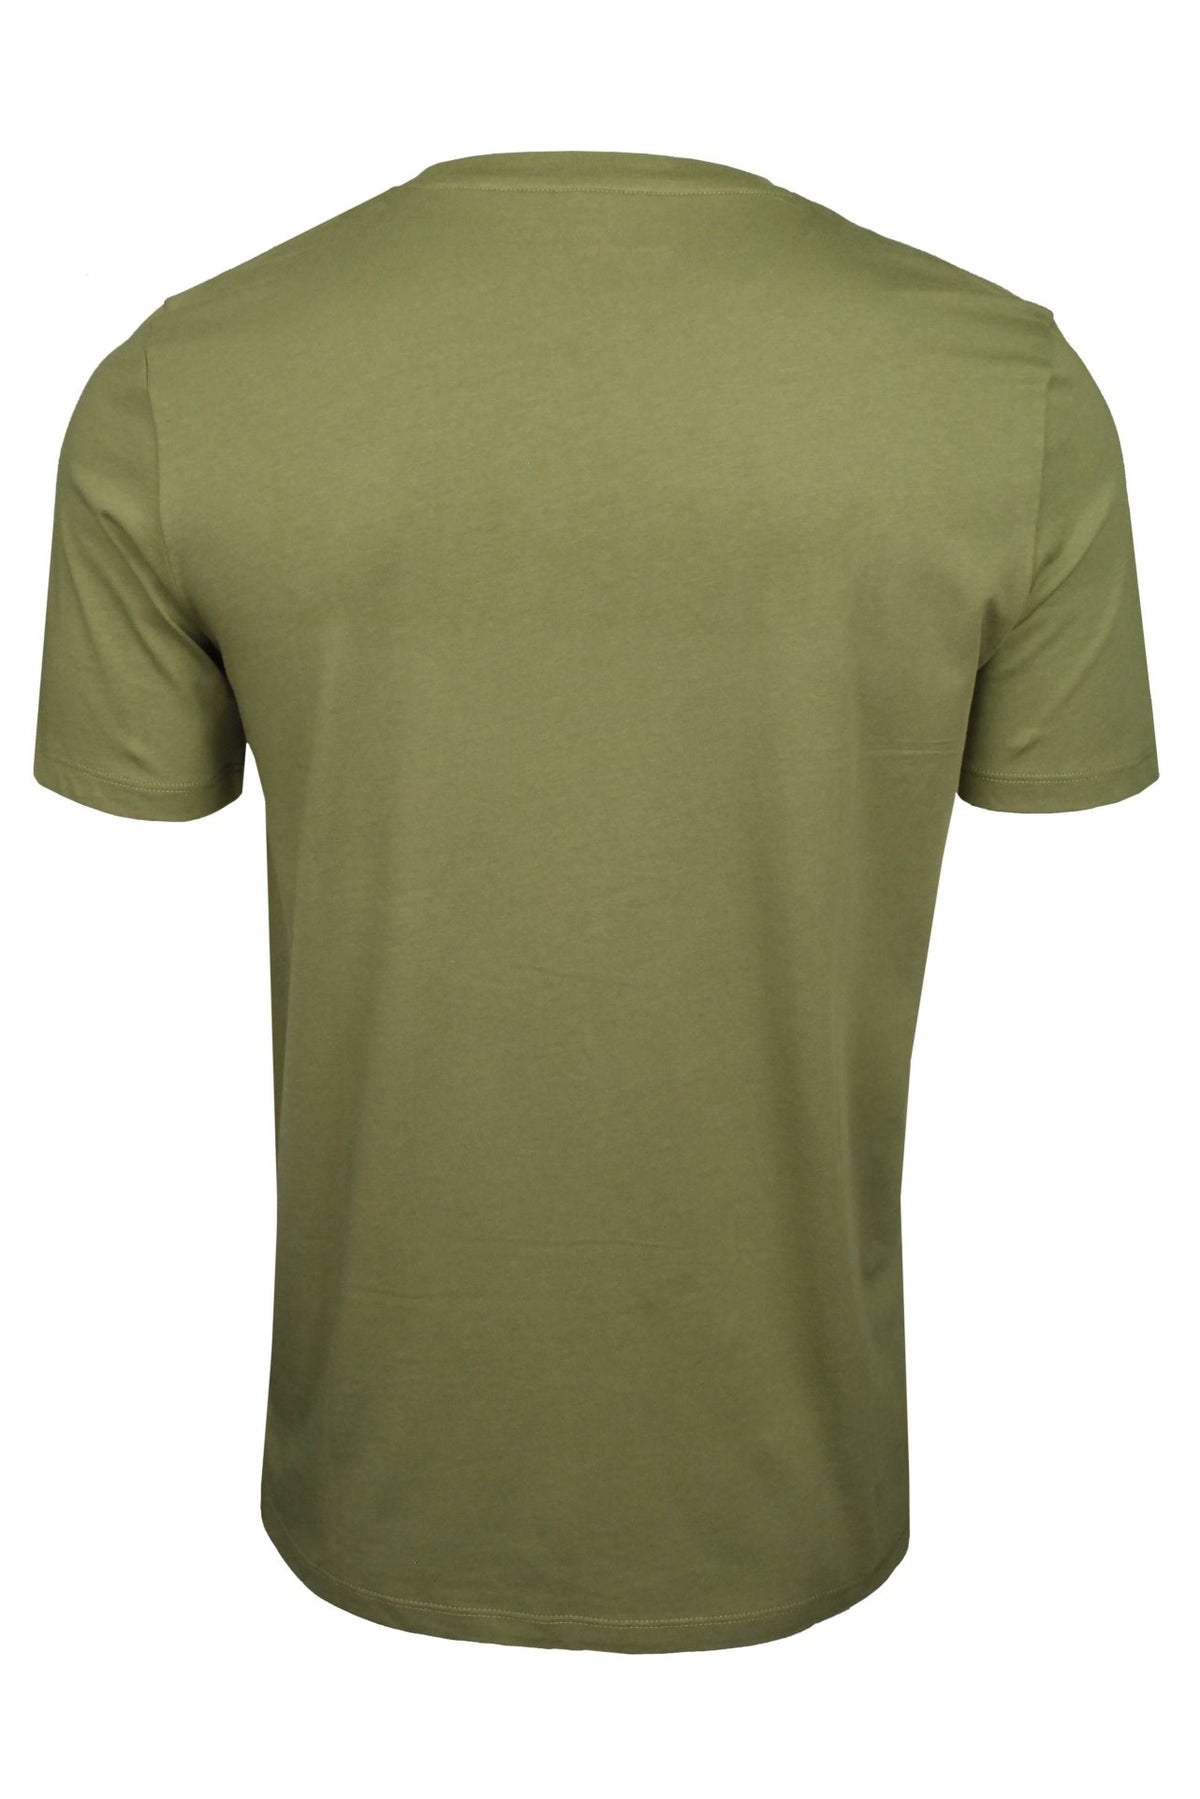 Timberland Mens Jersey T-Shirt 'Kennebec River Linea Tee', 03, Tb0A2C31, Cassel Earth